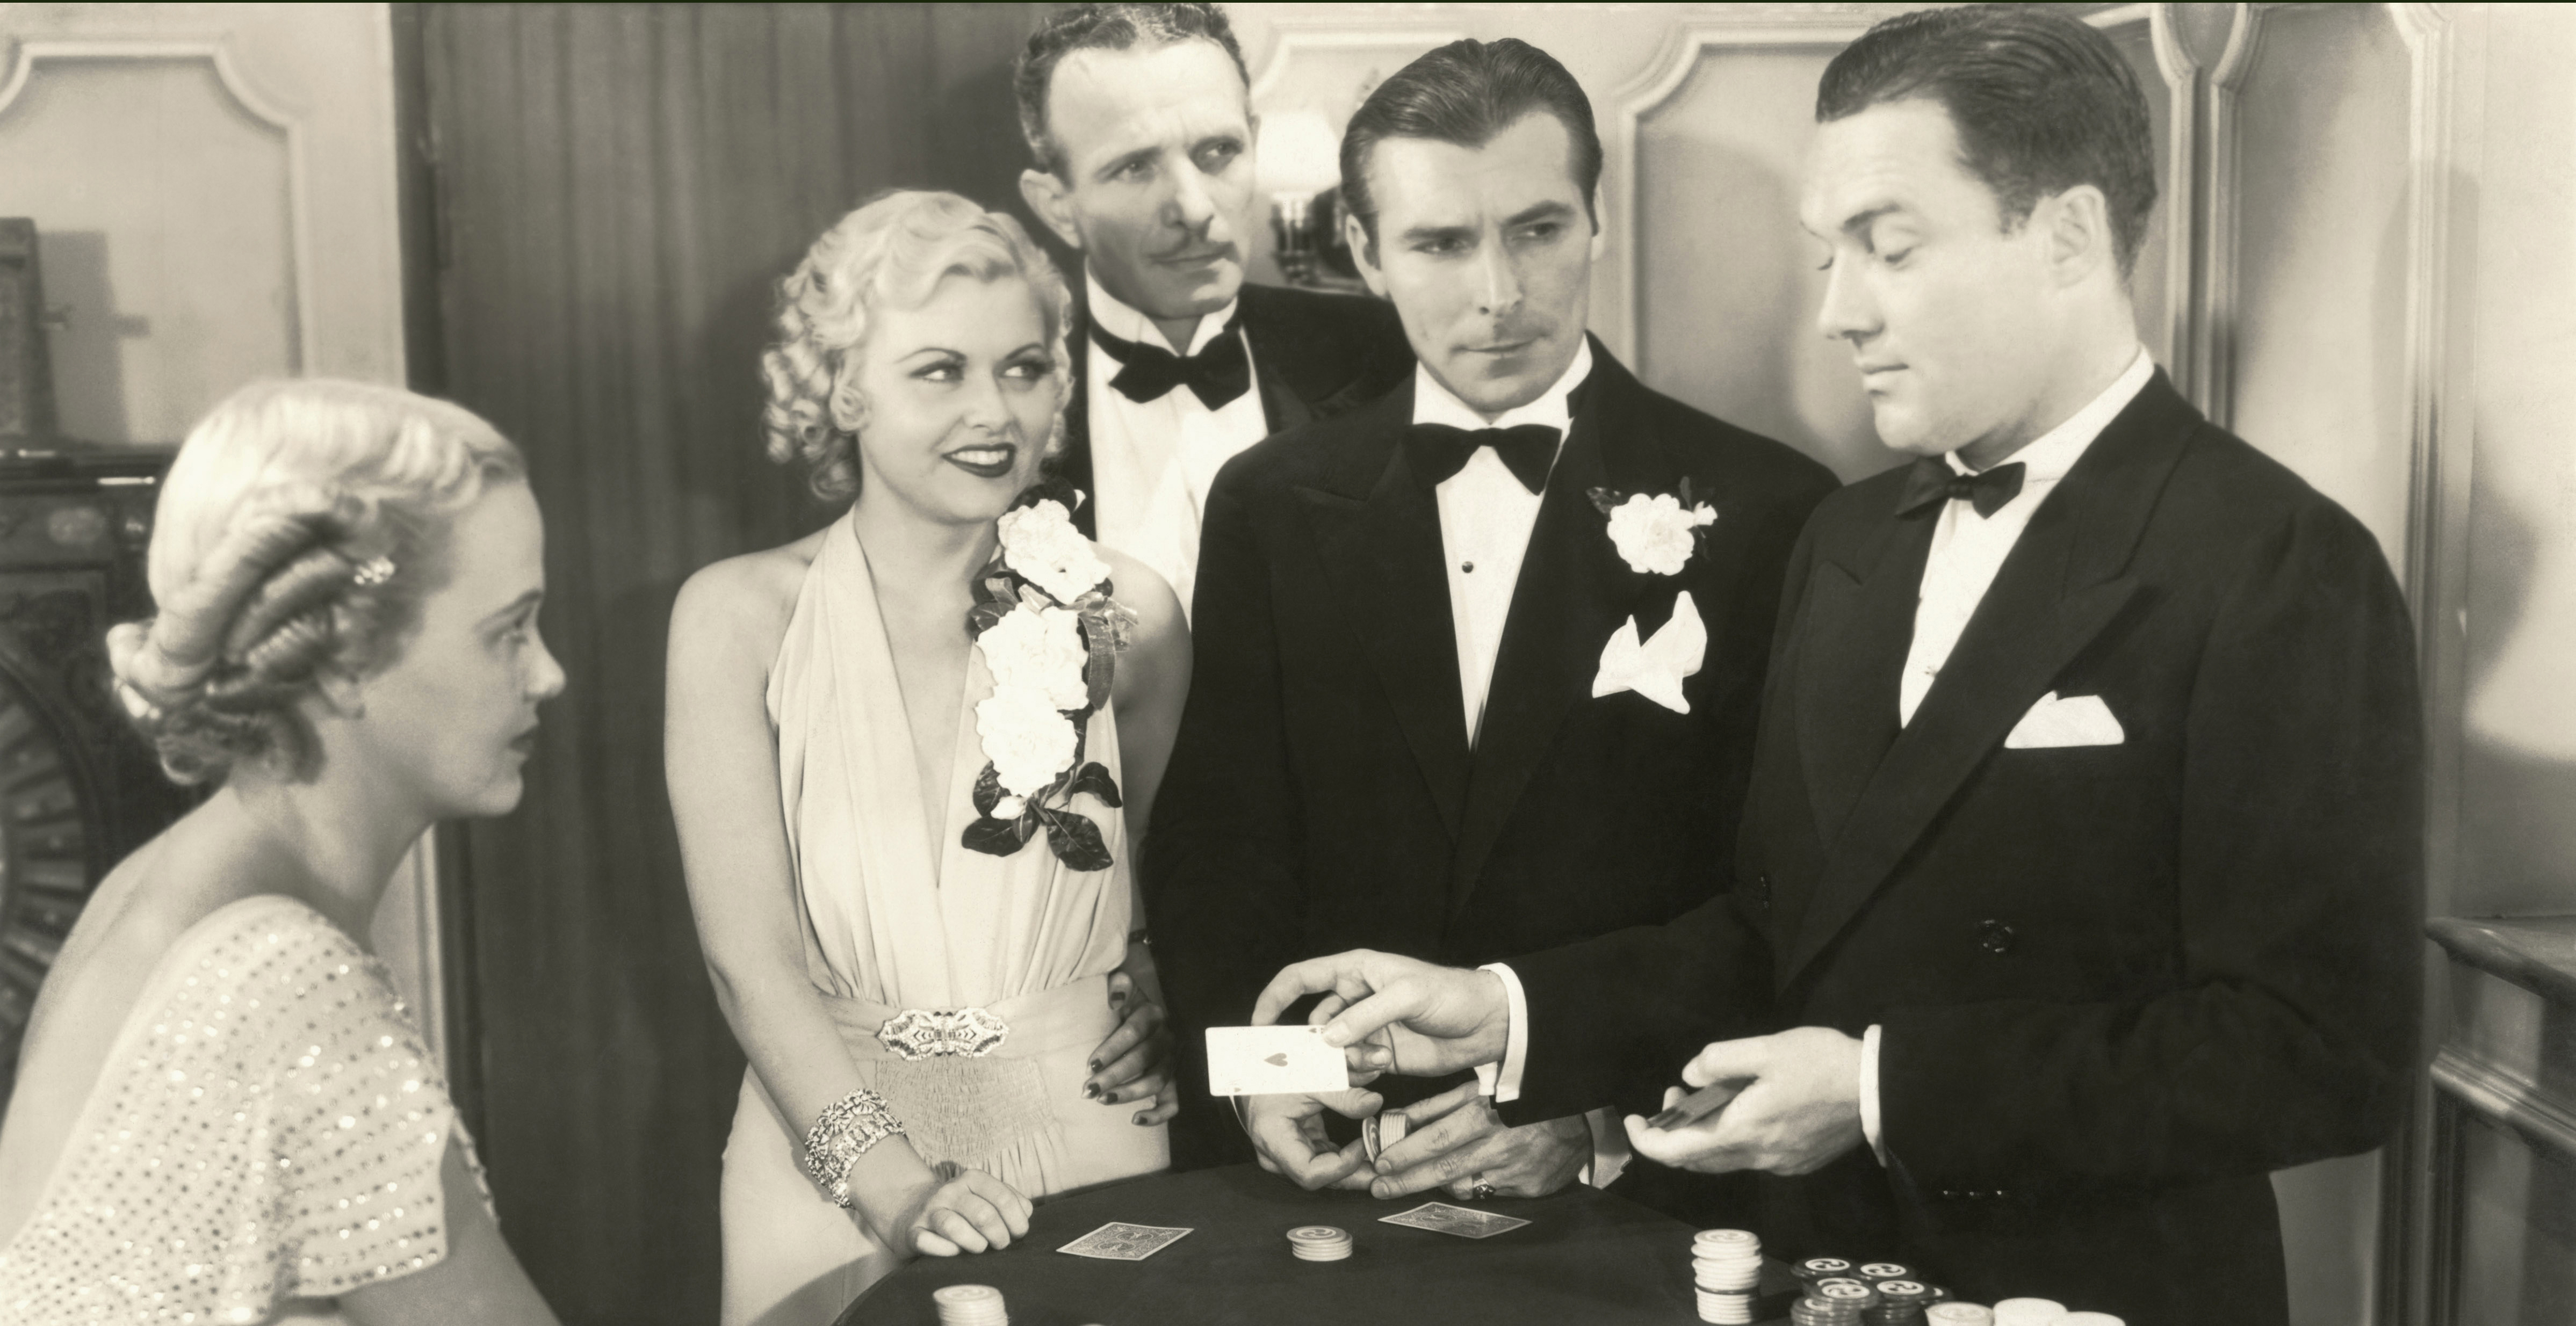 Retro new casino без верификации. Ретро фото Покер. Ретро казино. Казино ретро фото. Казино в 1940 году.